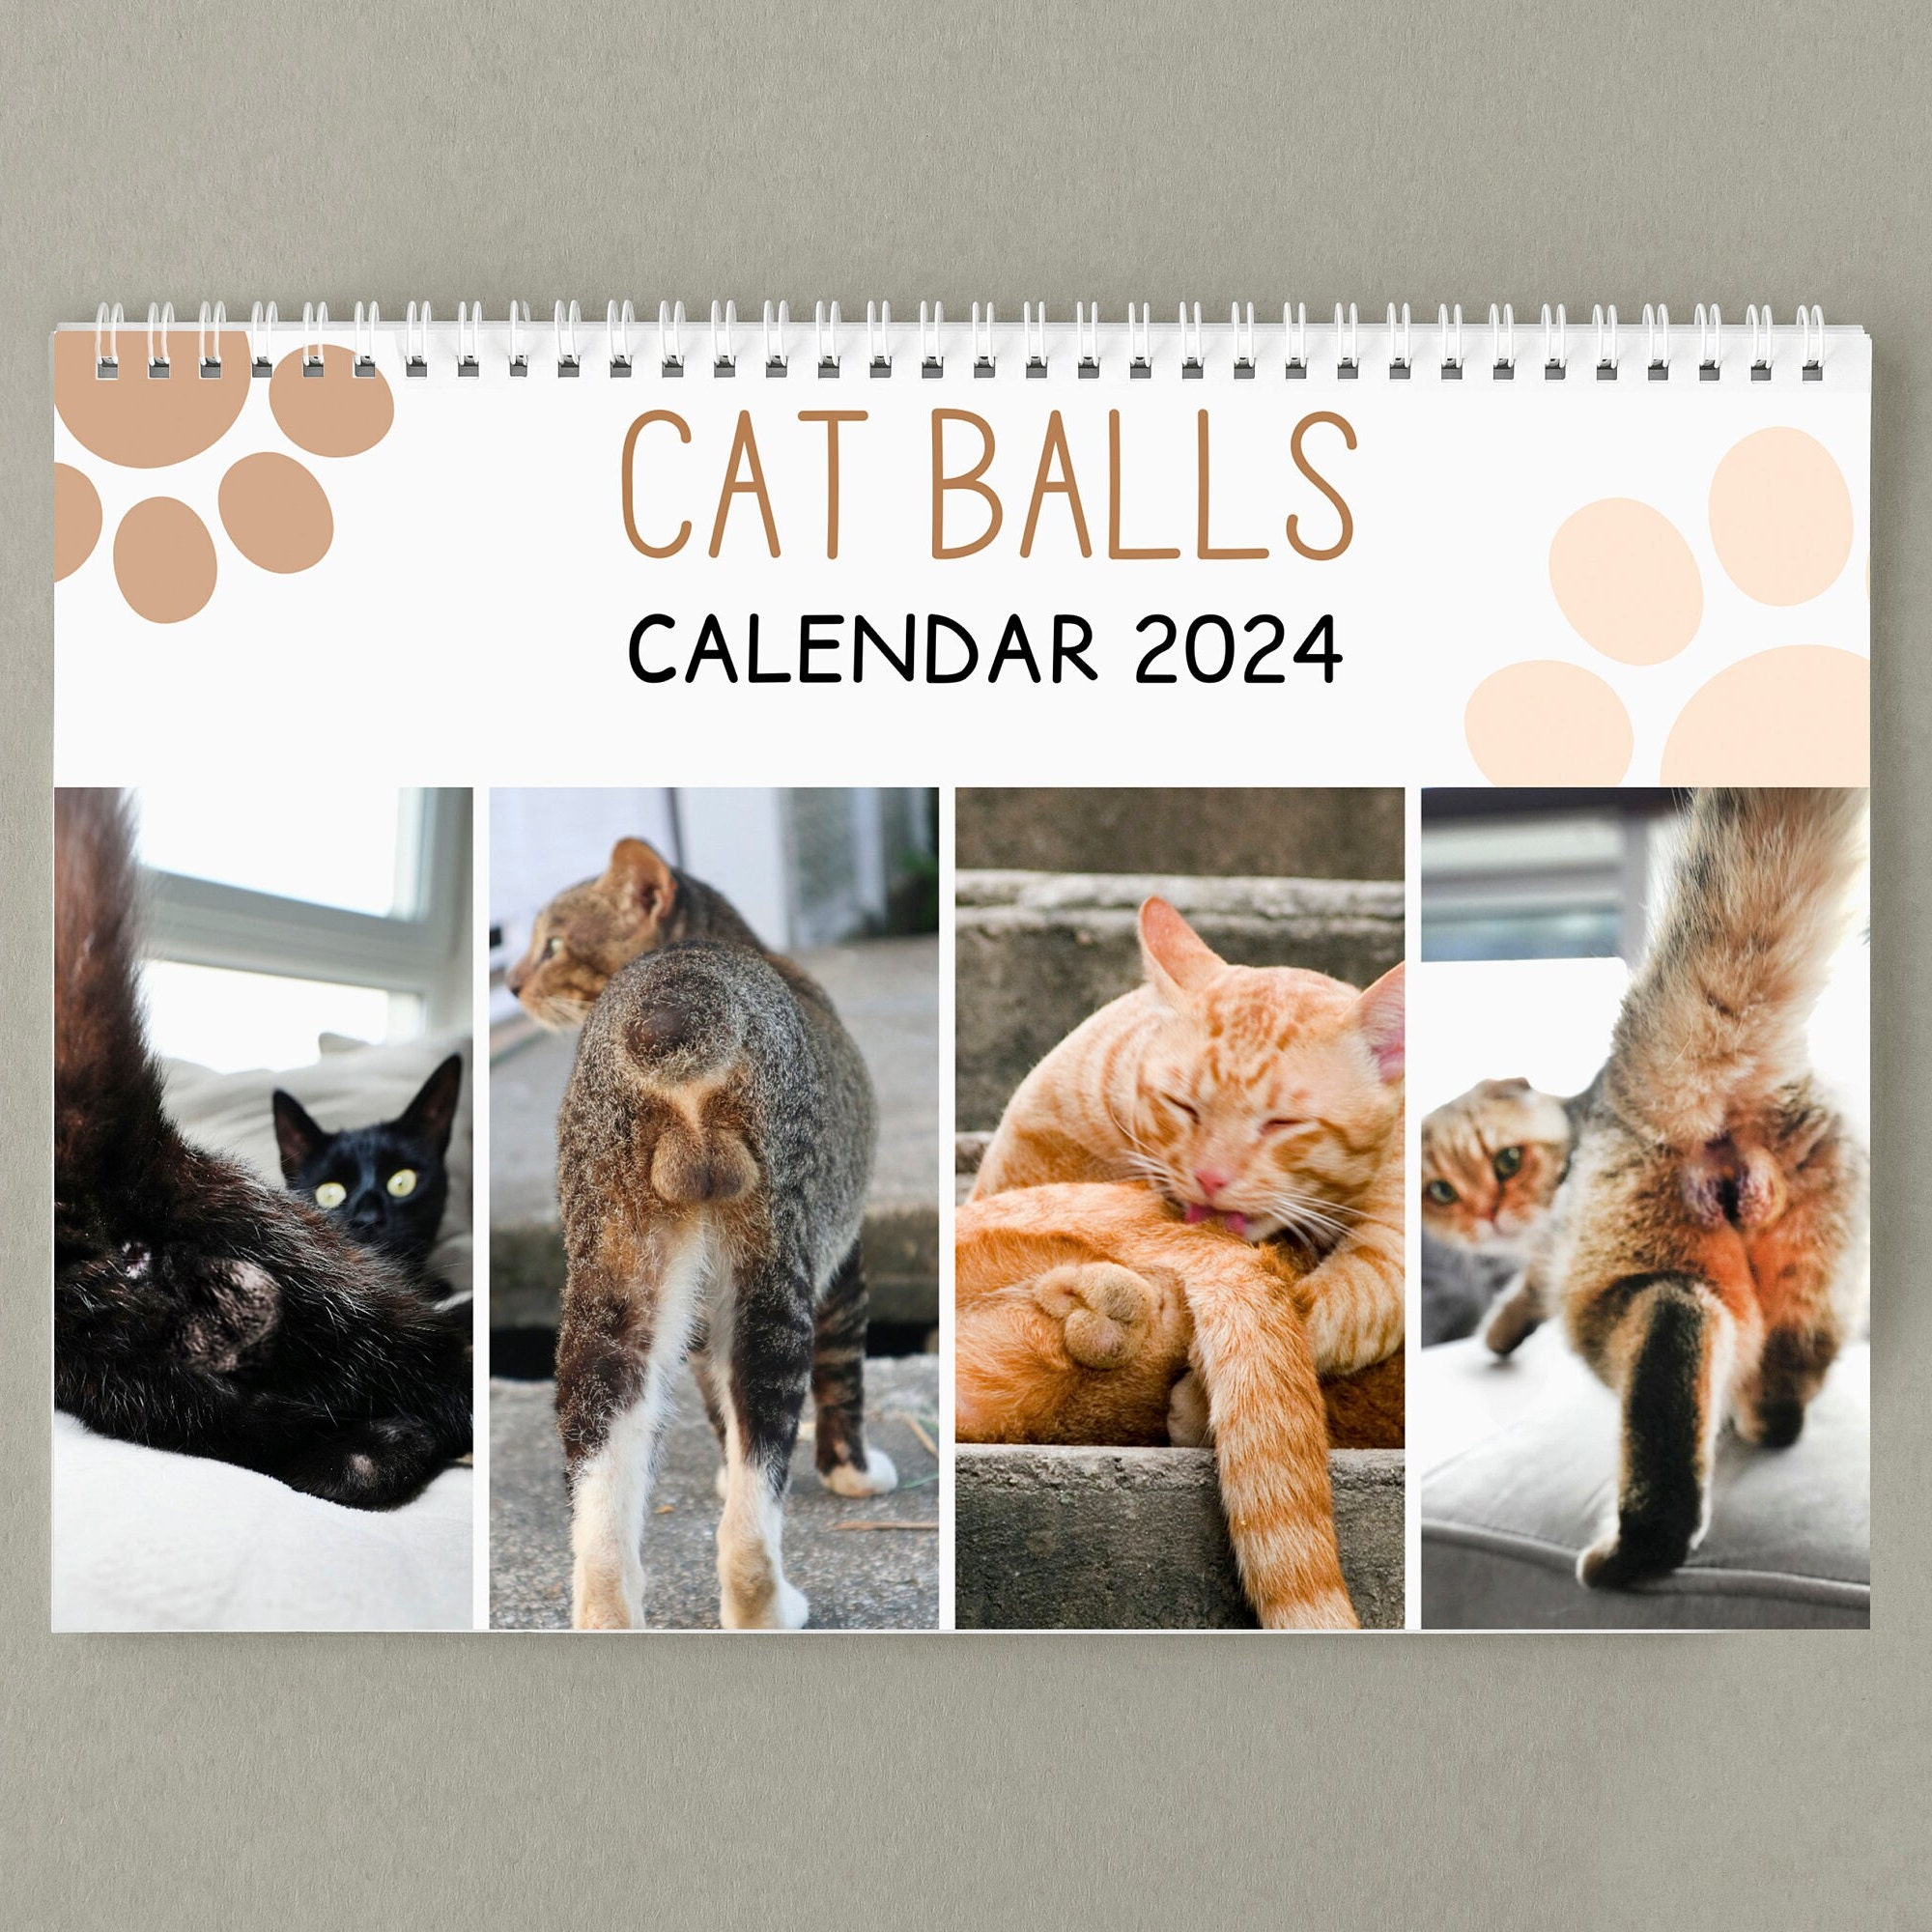 Acheter le calendrier Cats Around the World 2024 ? Rapidement et